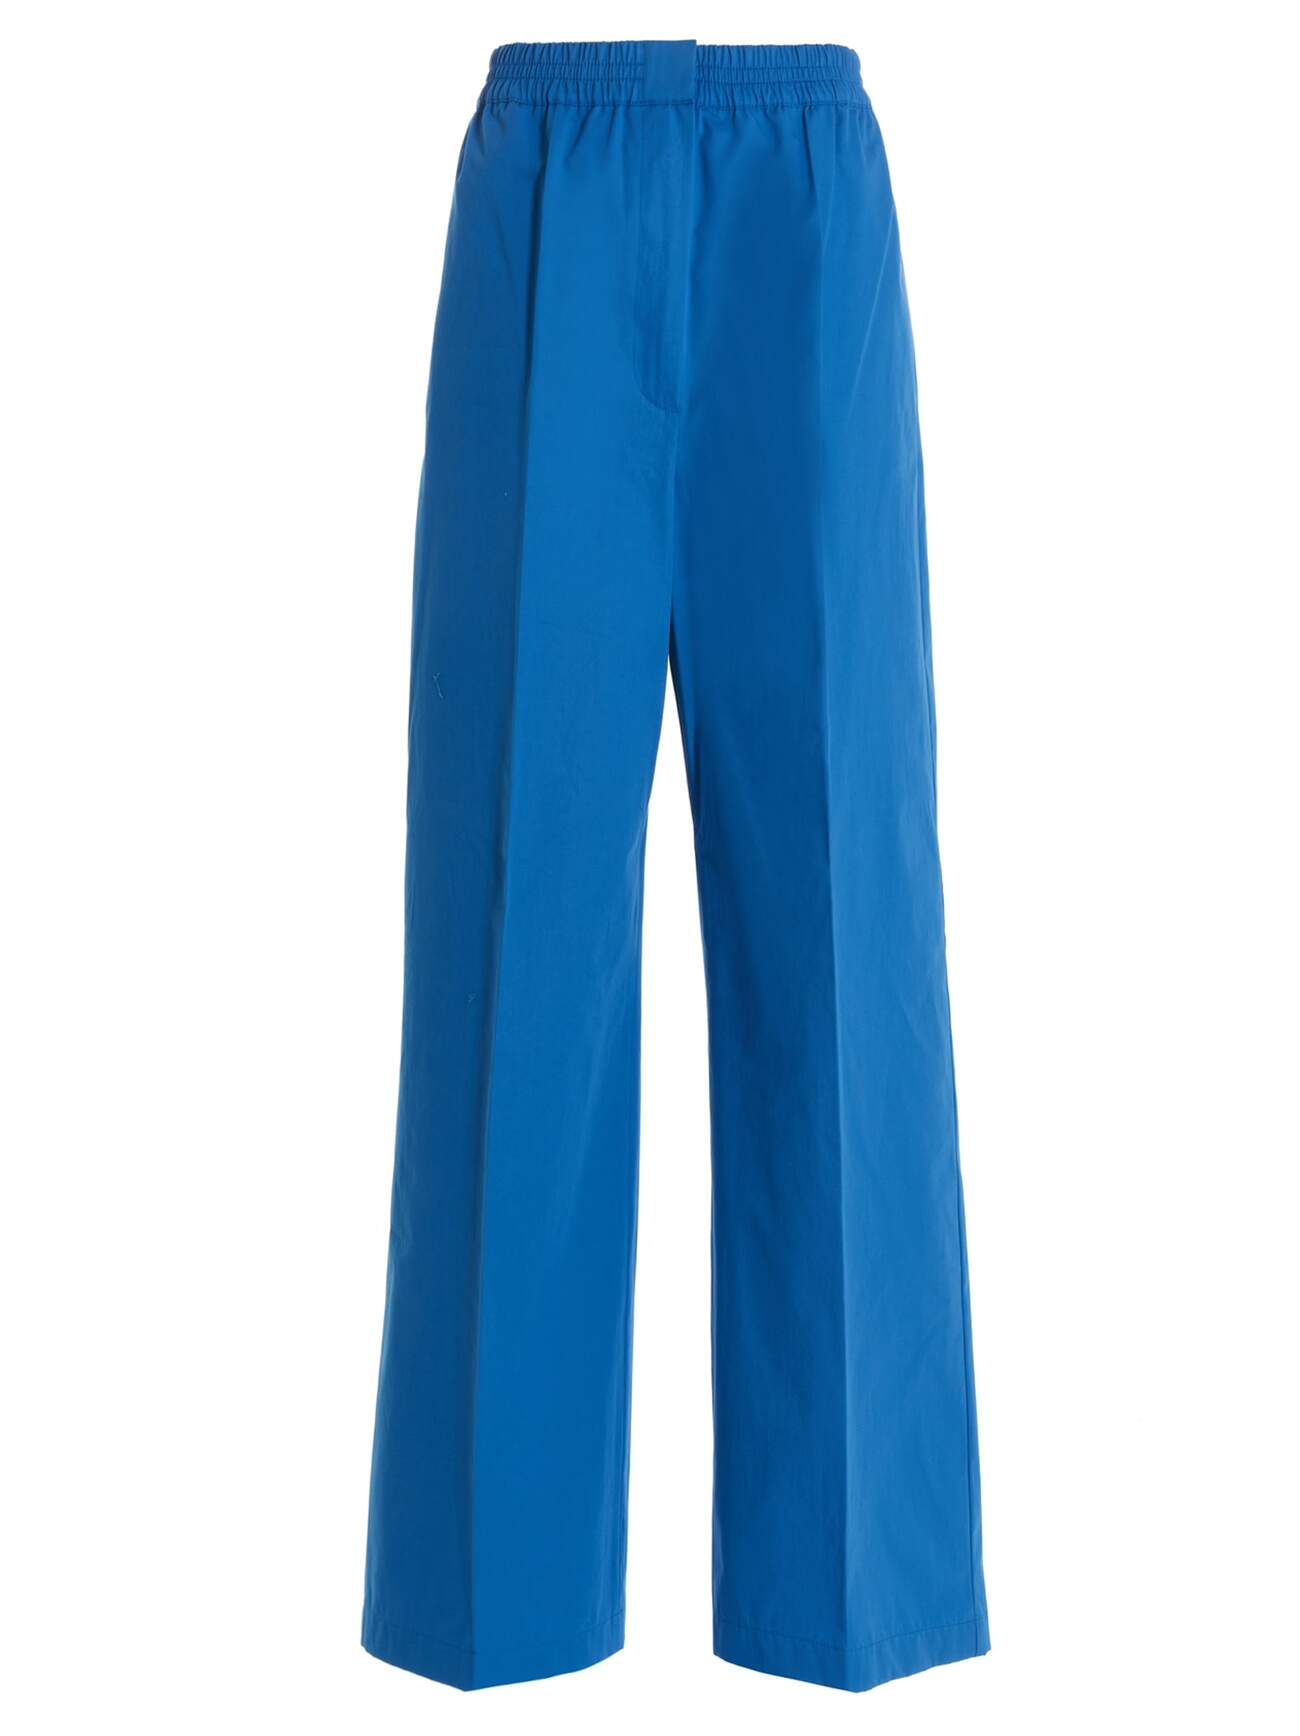 SportMax petali Pants in turquoise